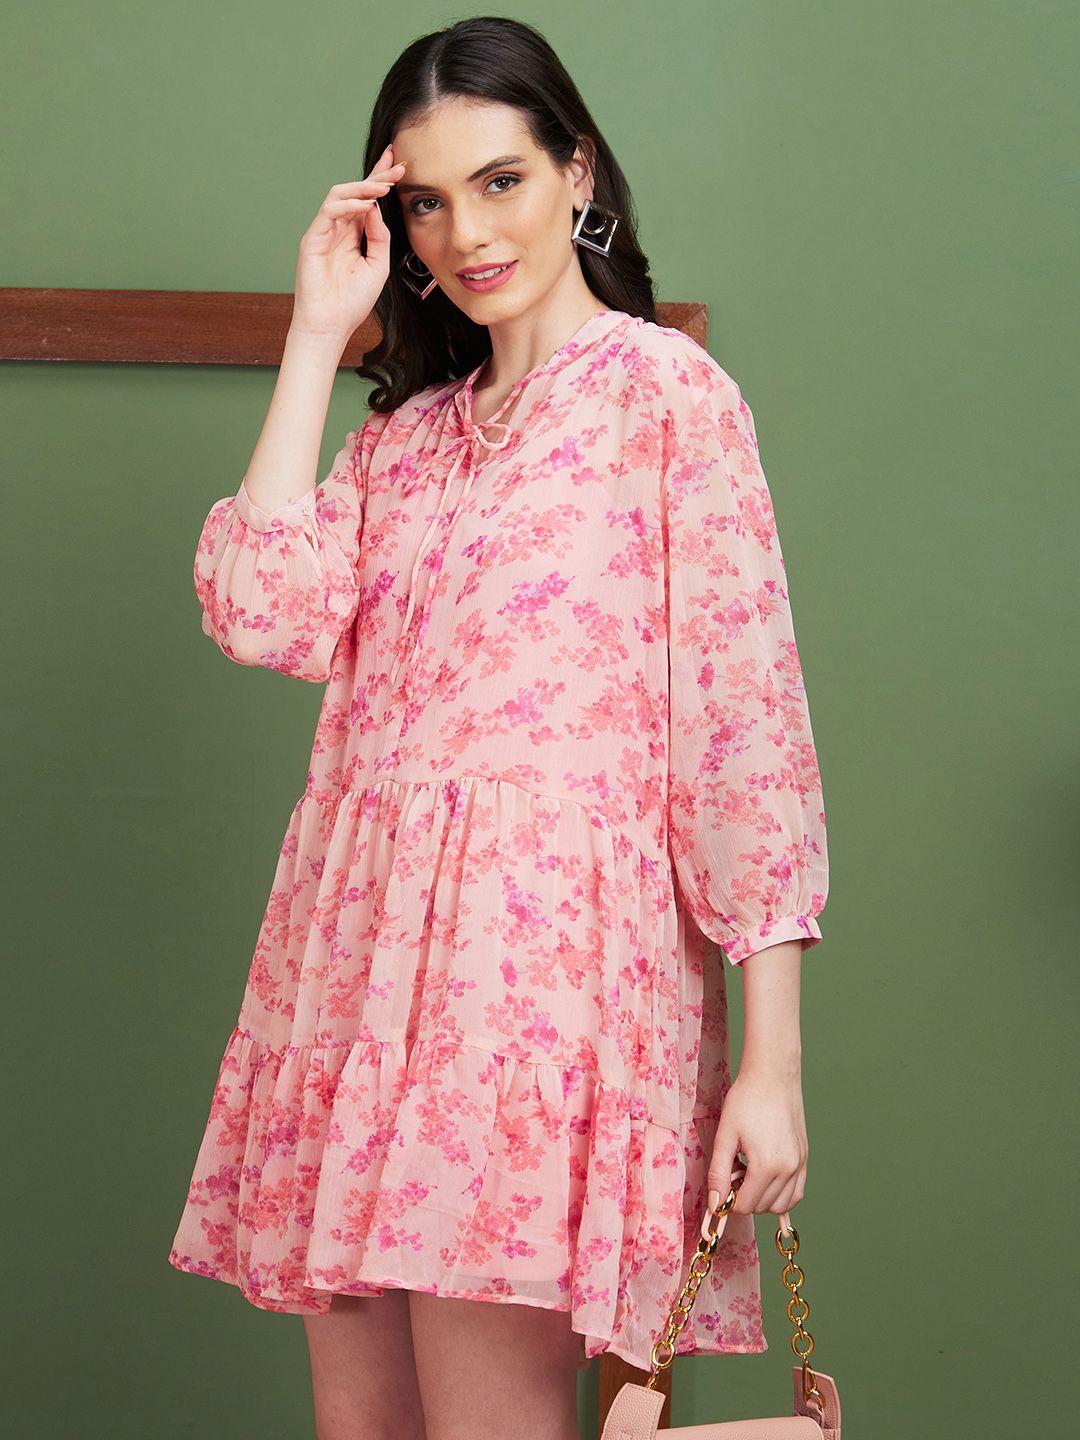 globus-pink-floral-print-georgette-a-line-dress